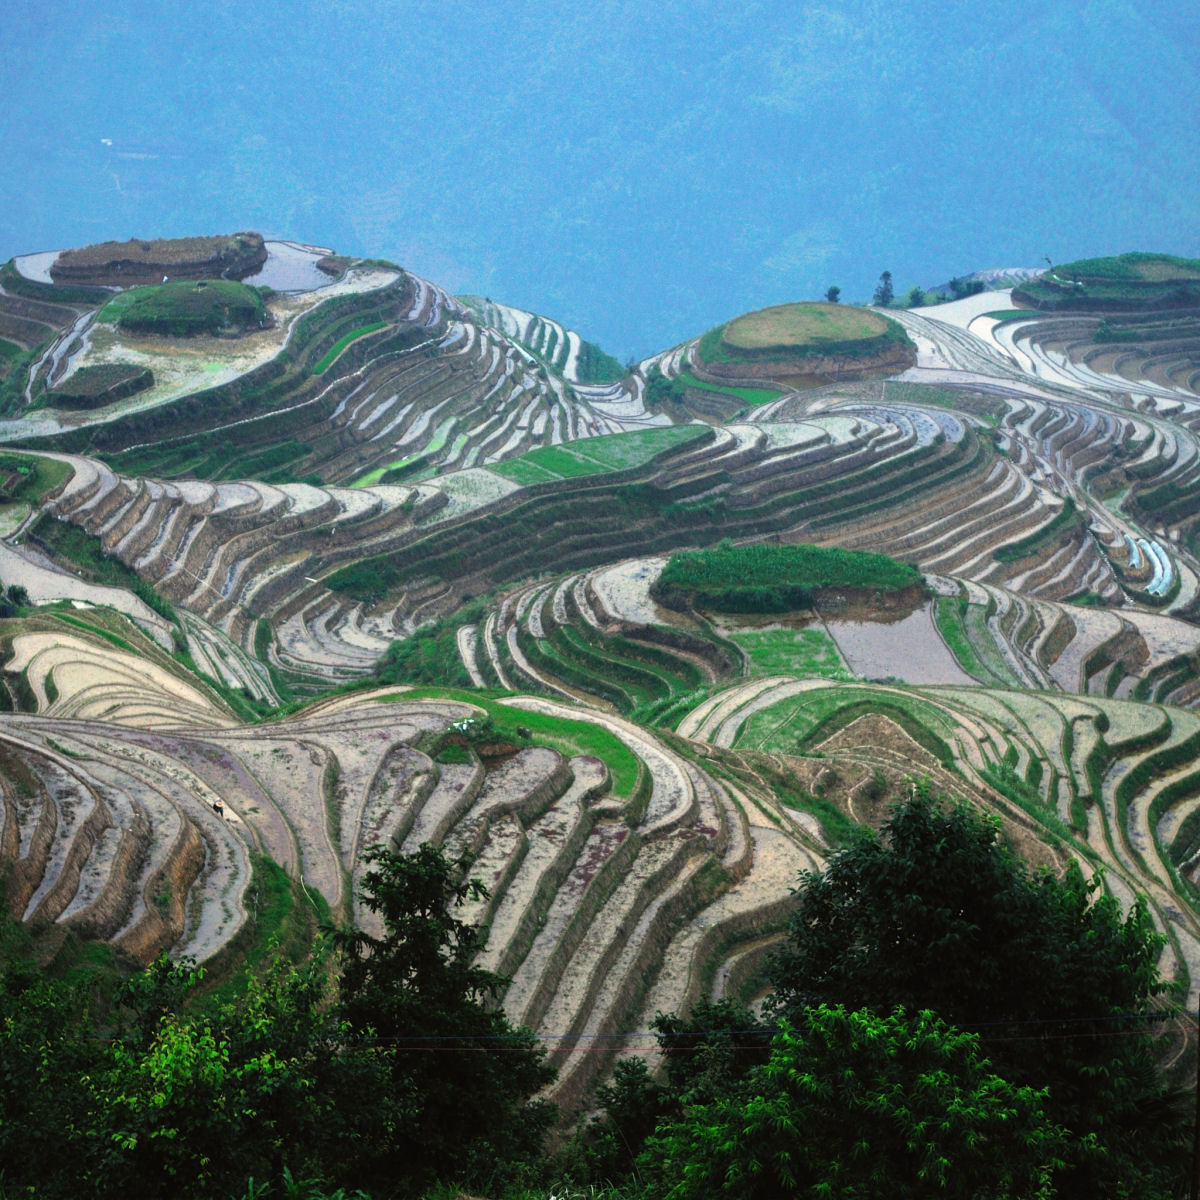 Os belos terraços de arroz de Longsheng, na China